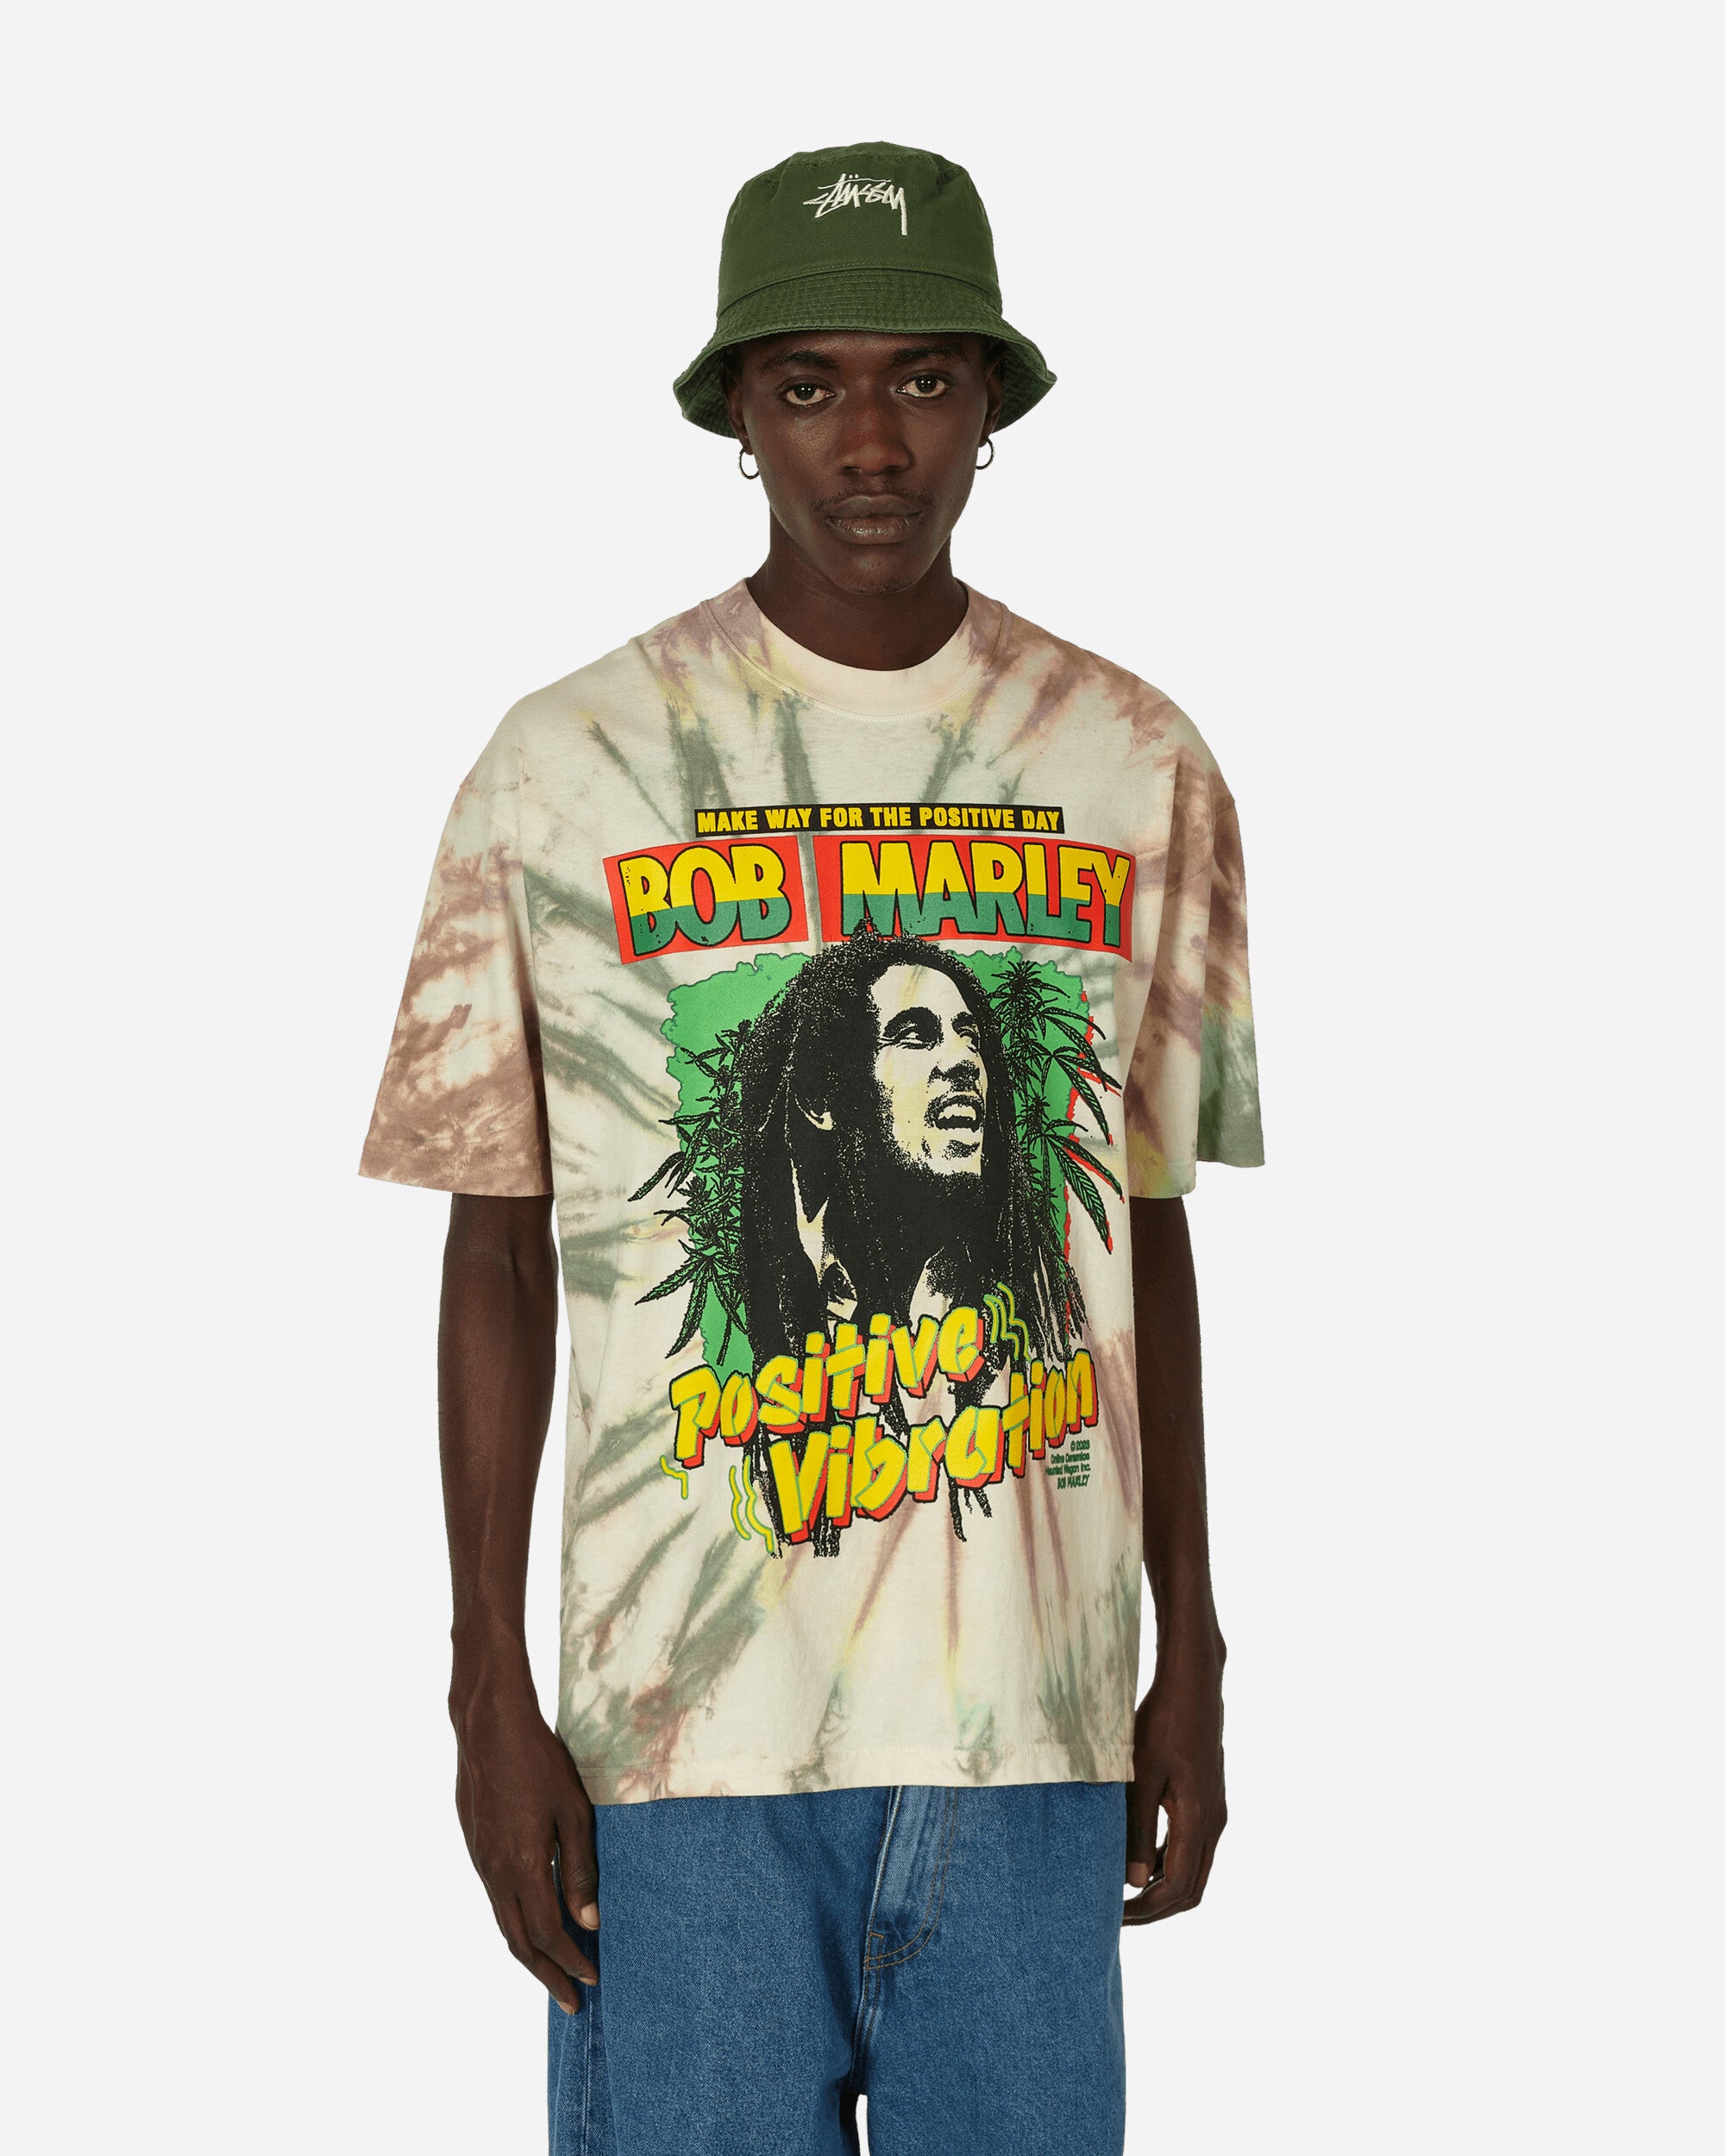 Bob Marley Positive Vibration Hand Dyed T-Shirt Tie-Dye